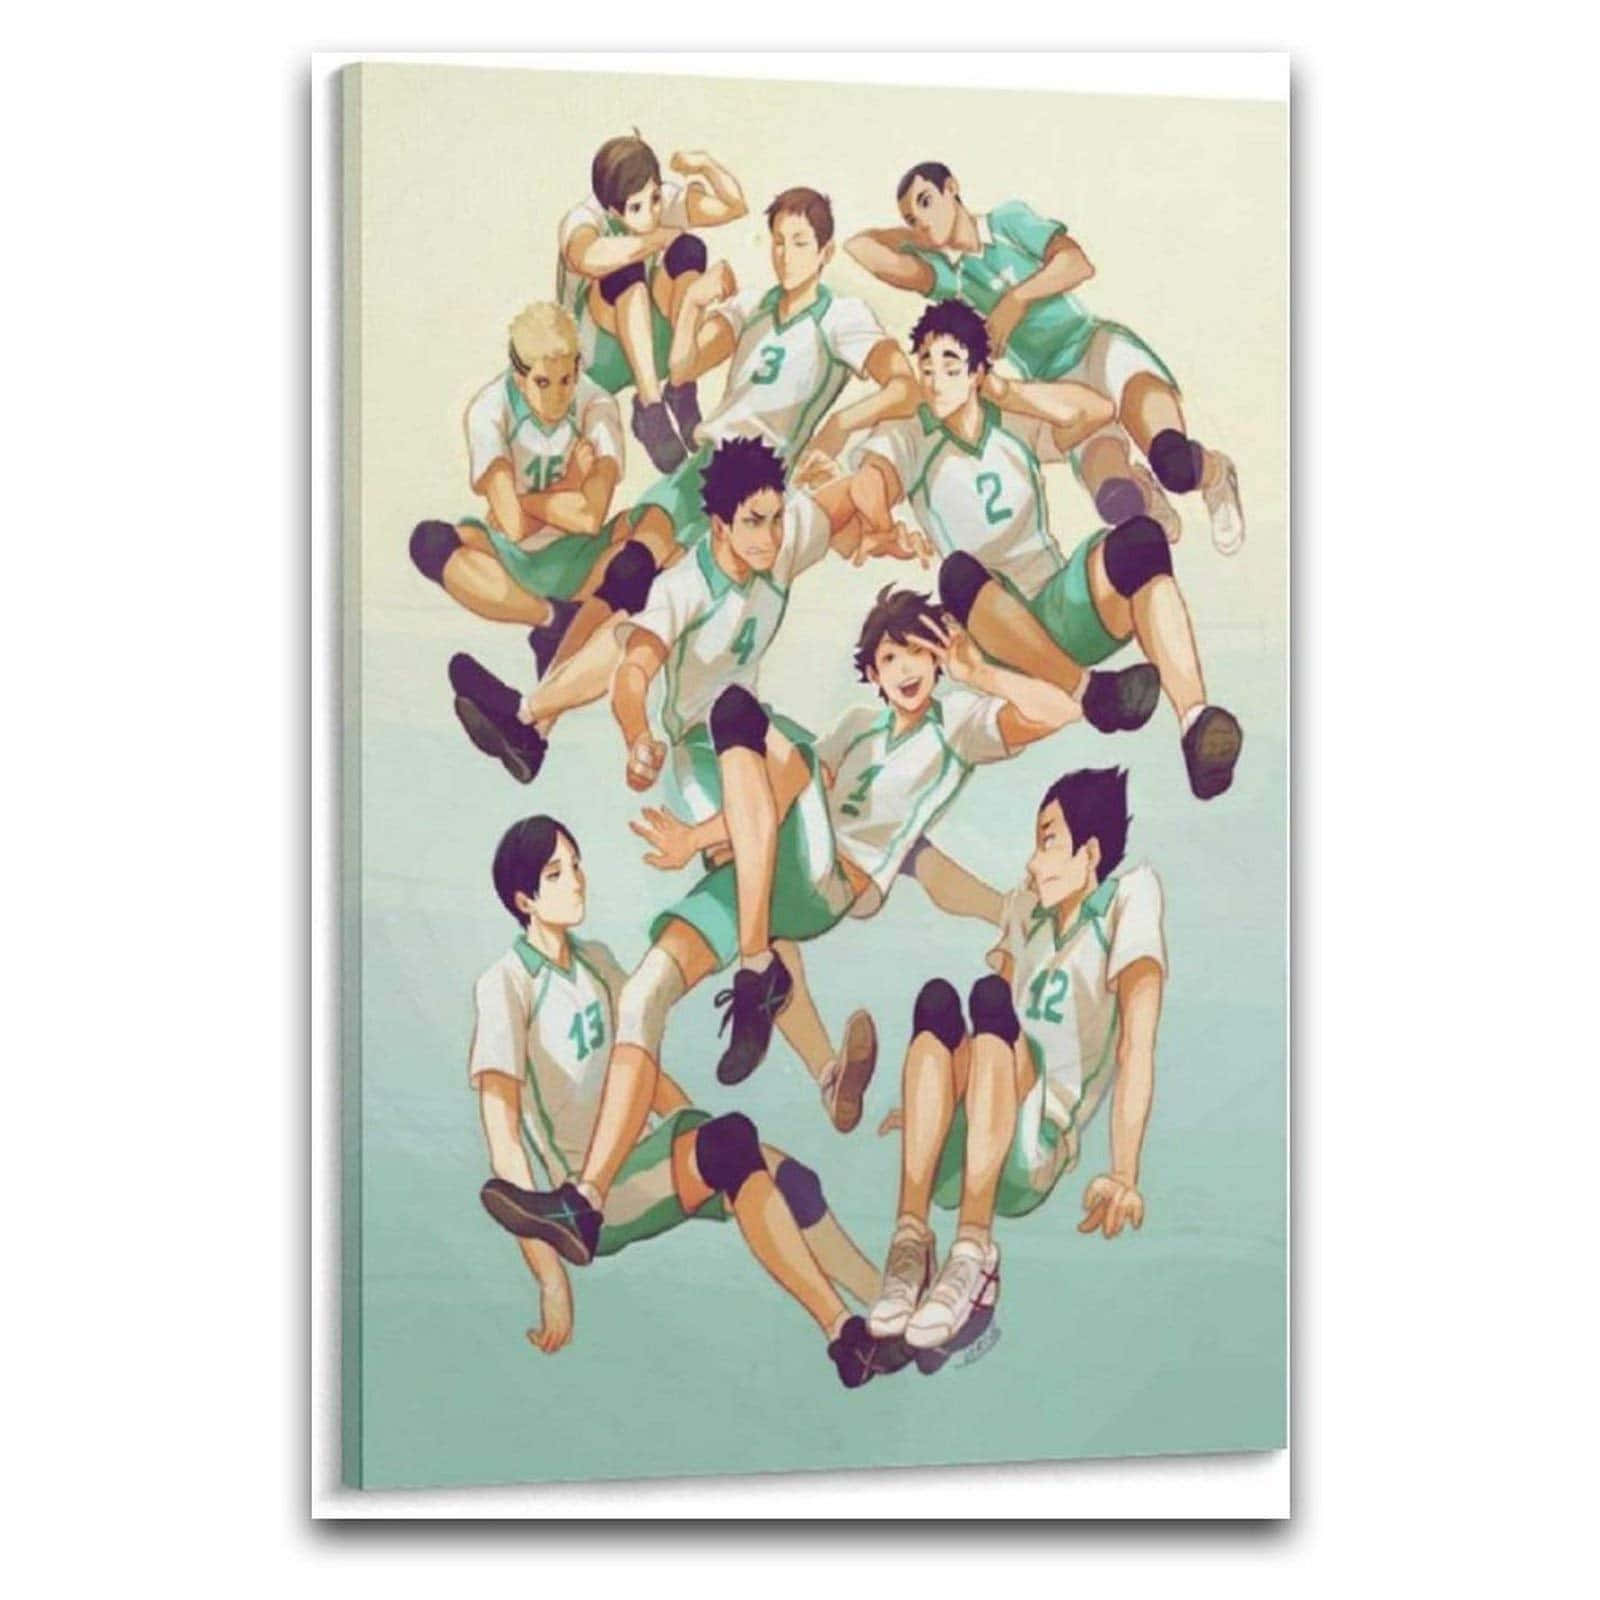 Tilfredshed I Volleyball For Aoba Johsai Spillere Wallpaper